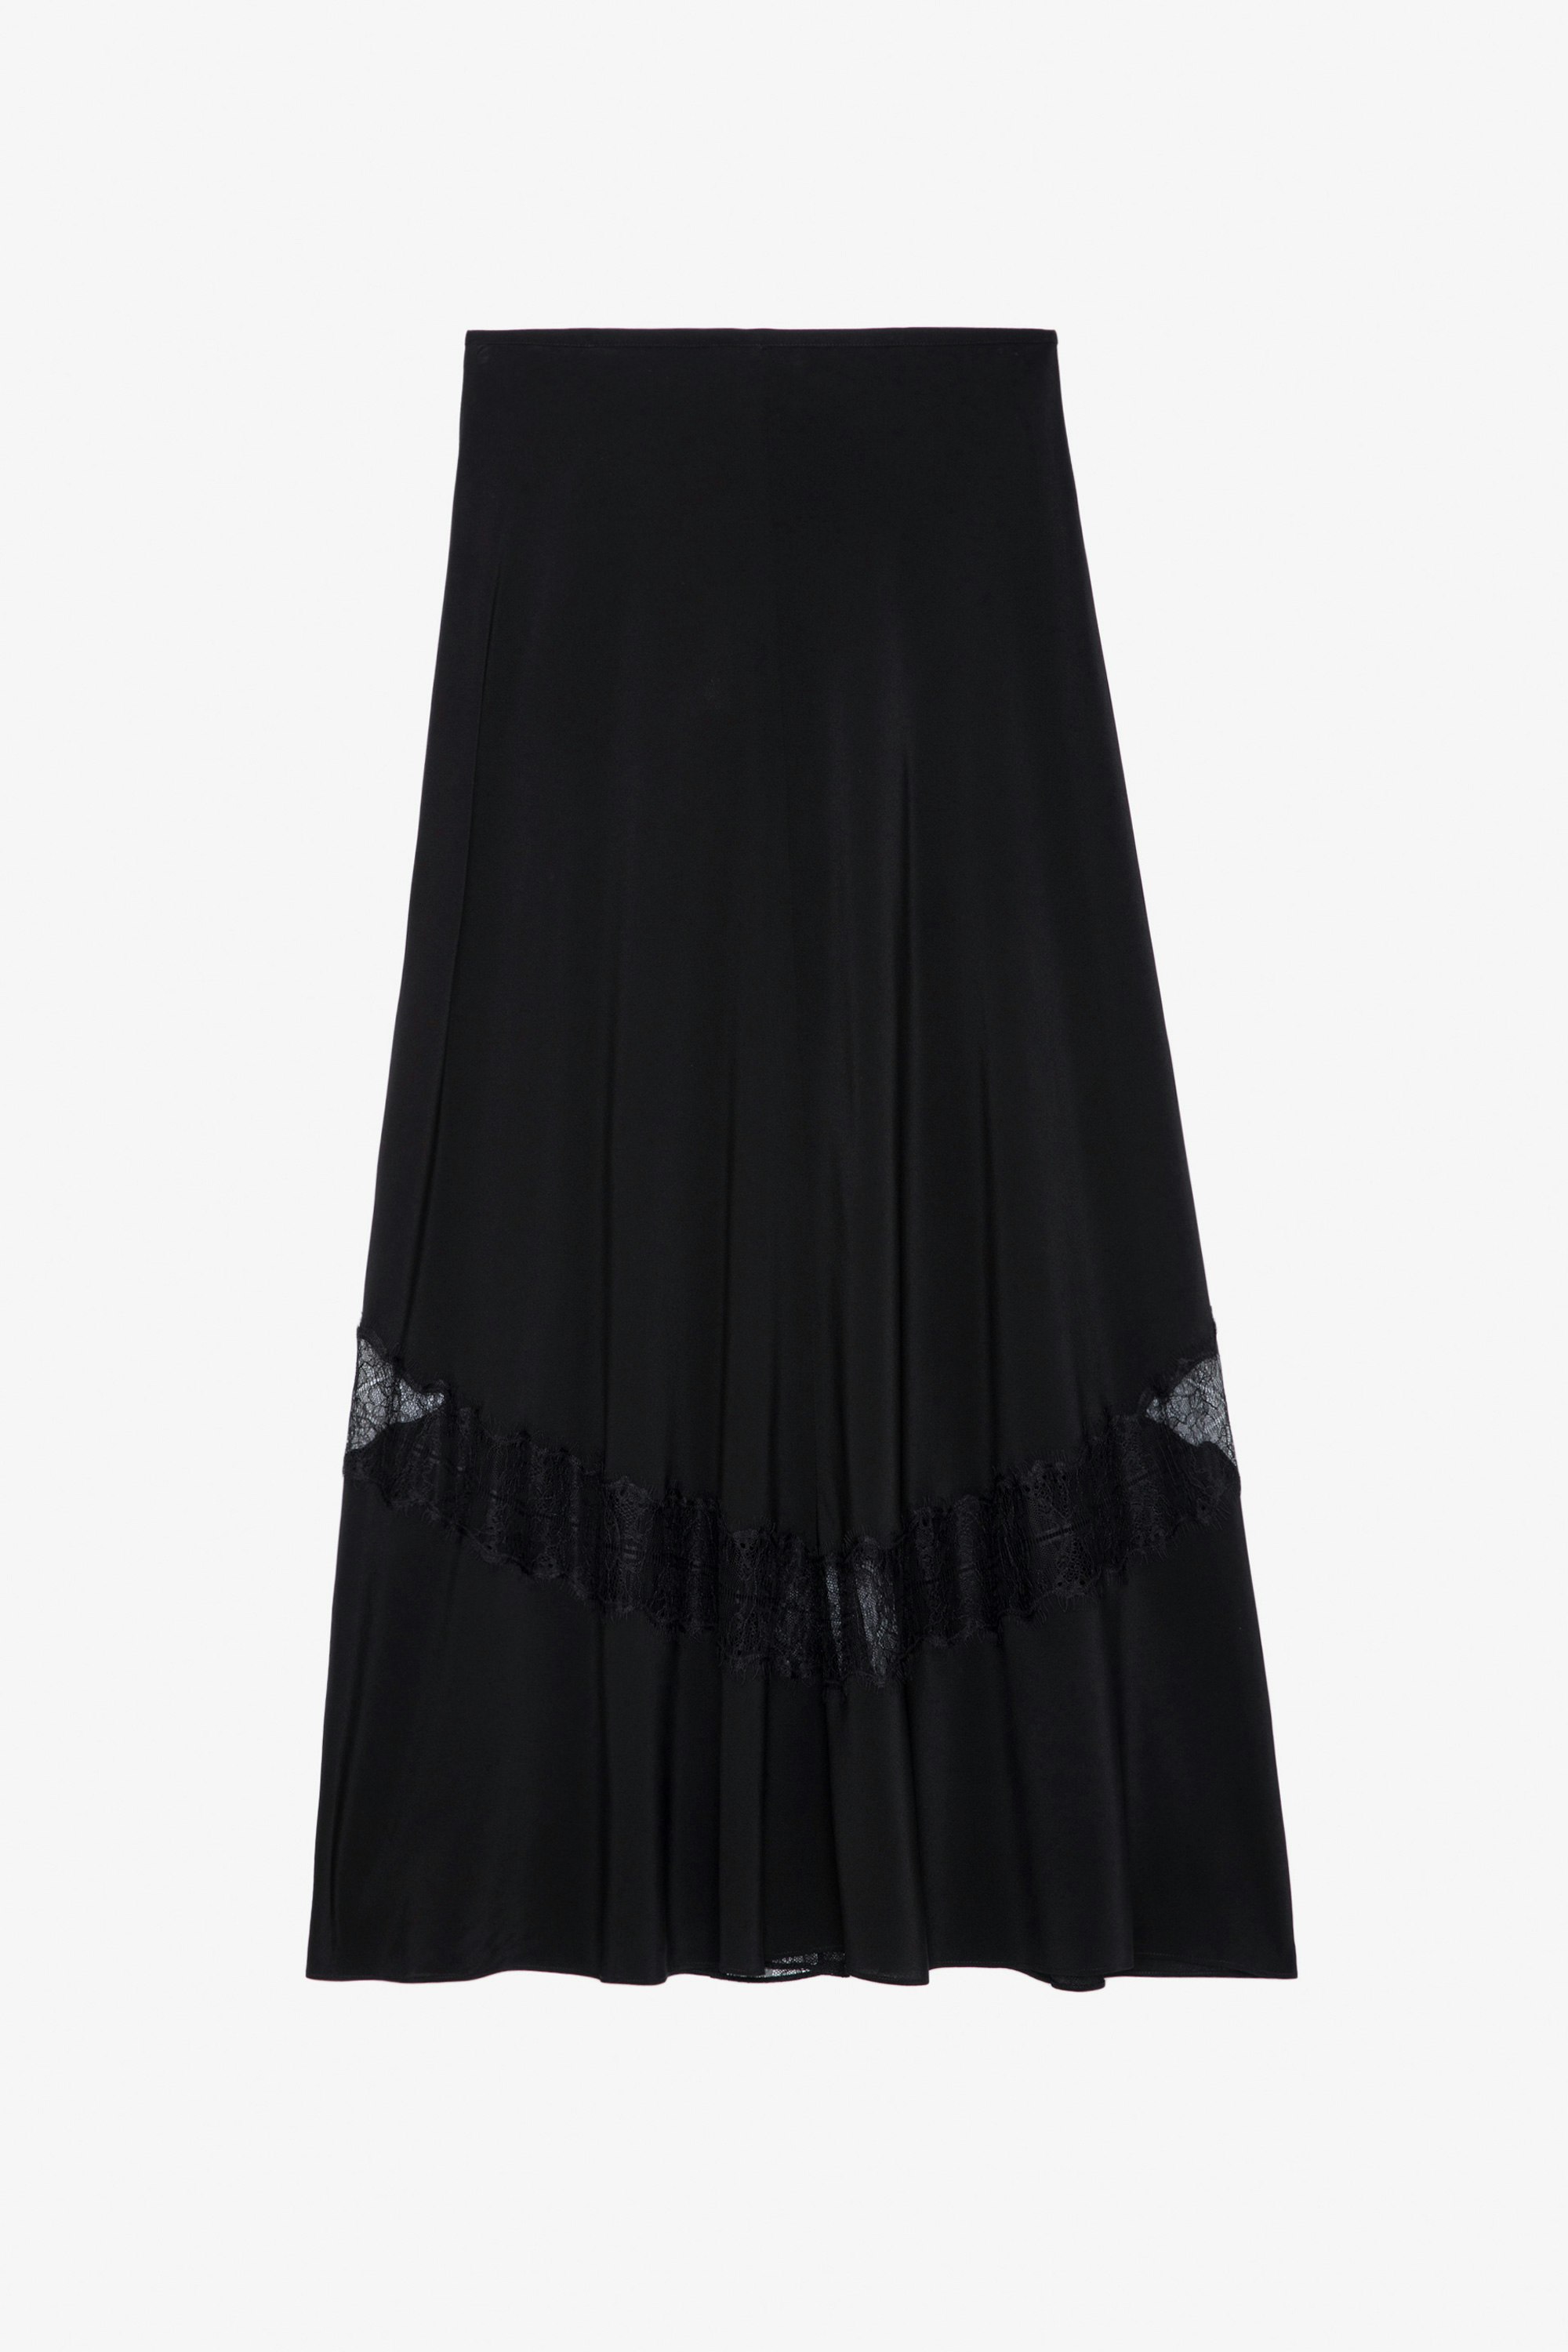 Jaylal Silk Skirt - Women’s black silk long skirt with zip fastening, splits and lace detailing.